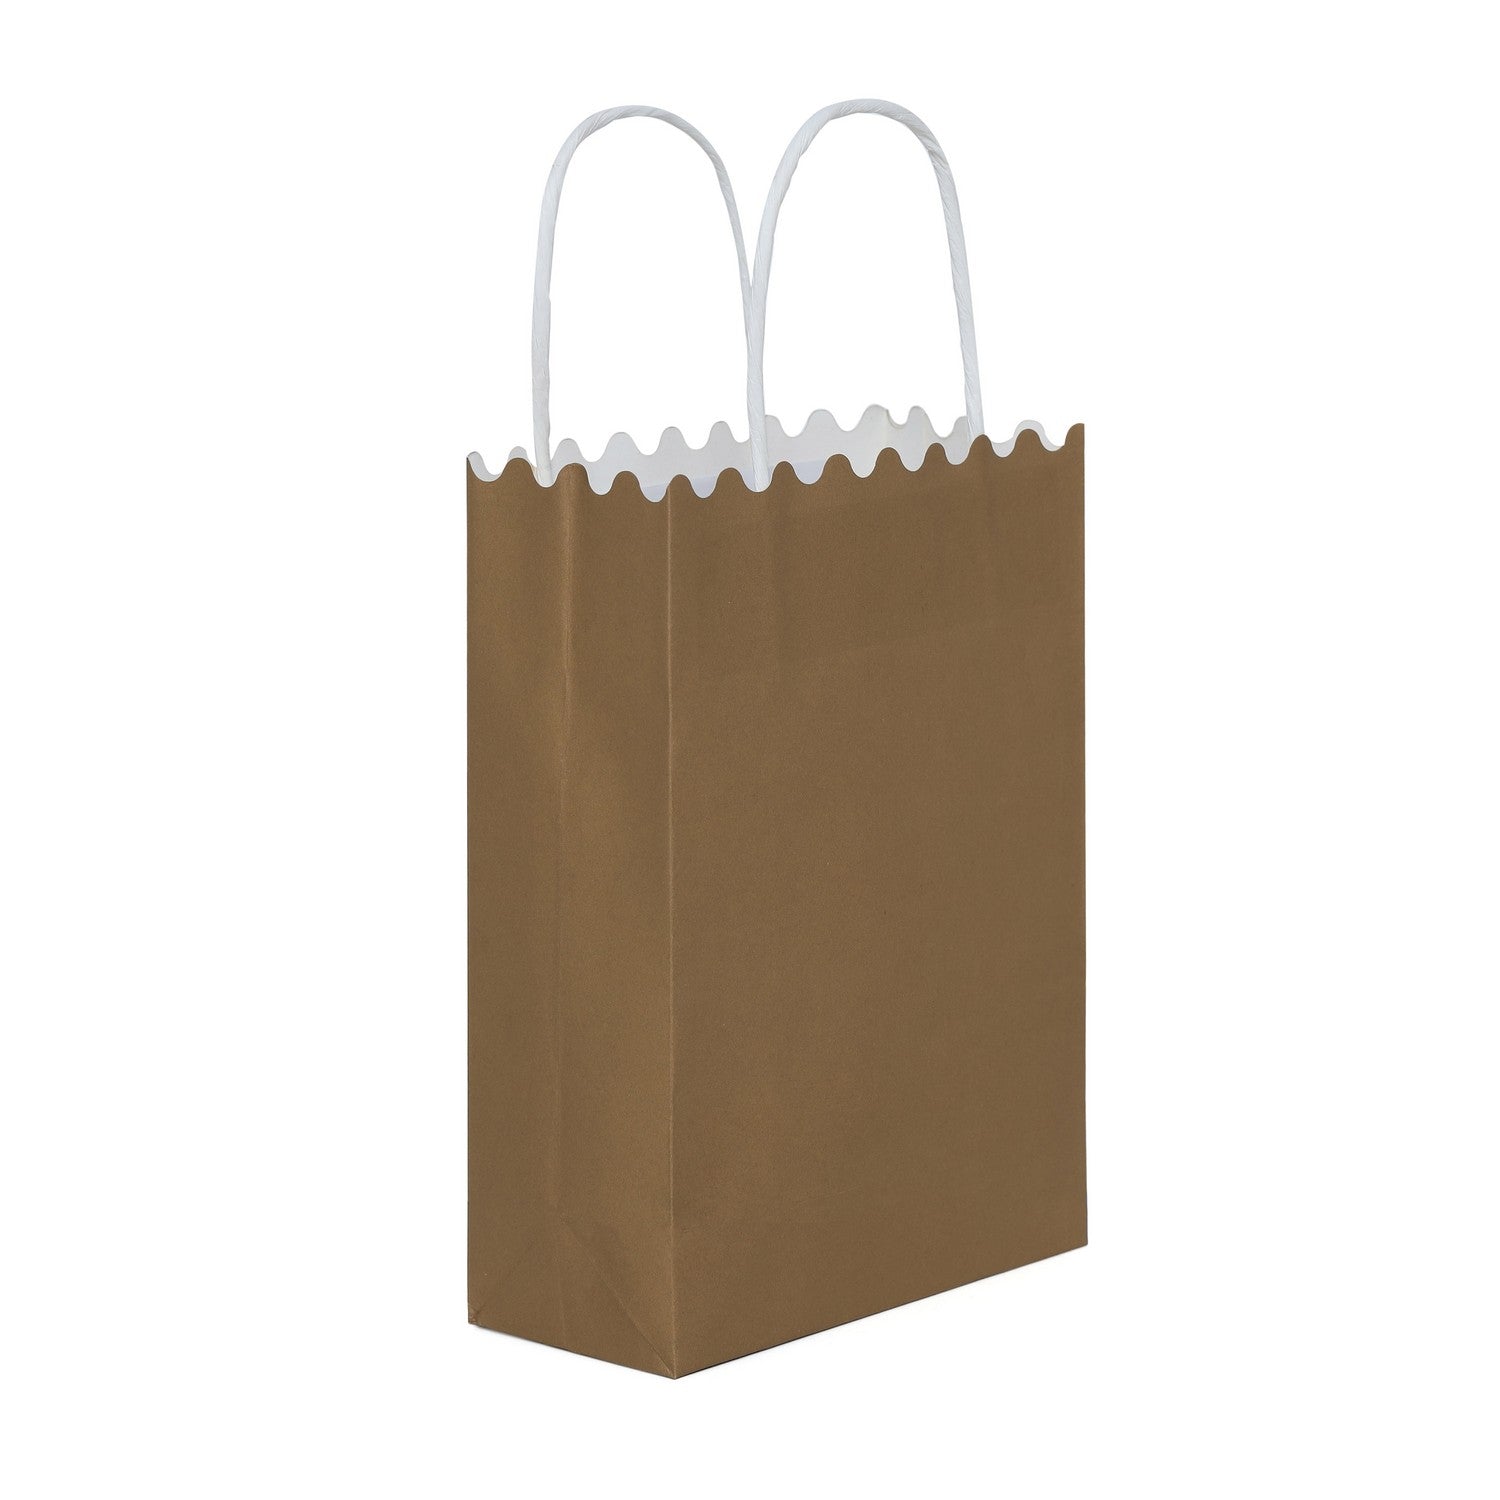 SHUBAN Plain Paper Bag for Gifting, Weddings, Anniversary, Birthday, Holiday Presents (24.5 X 18 X 8 CM ) - Set of 5 | Book Bargain Buy